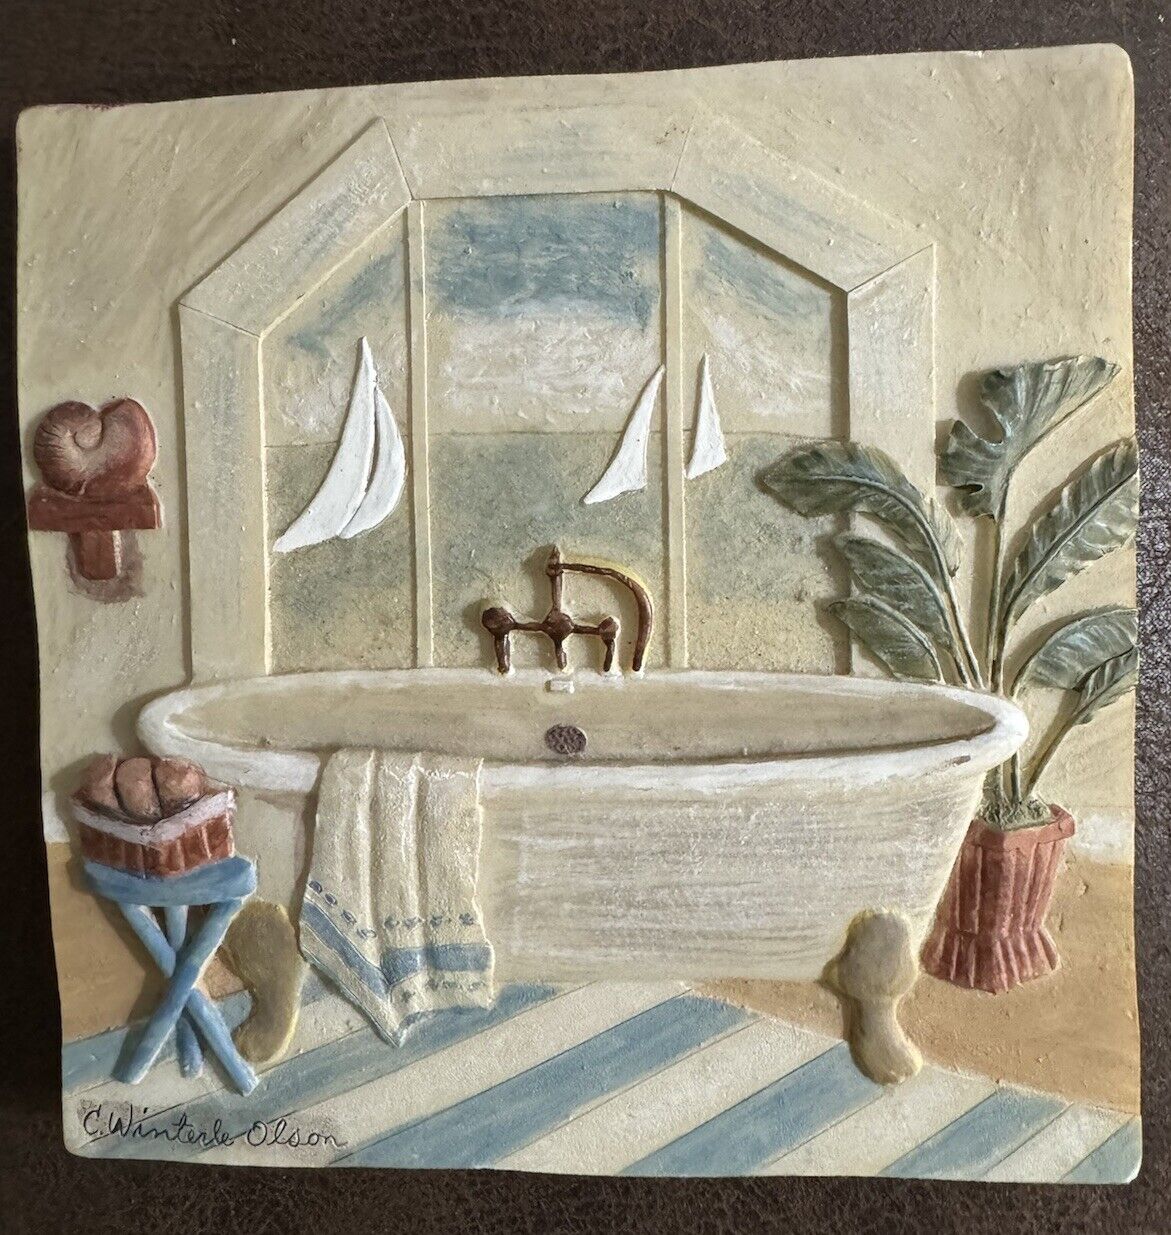 Vintage Signed C Winterle Olson 3D Clay Art Tile Claw Bathtub